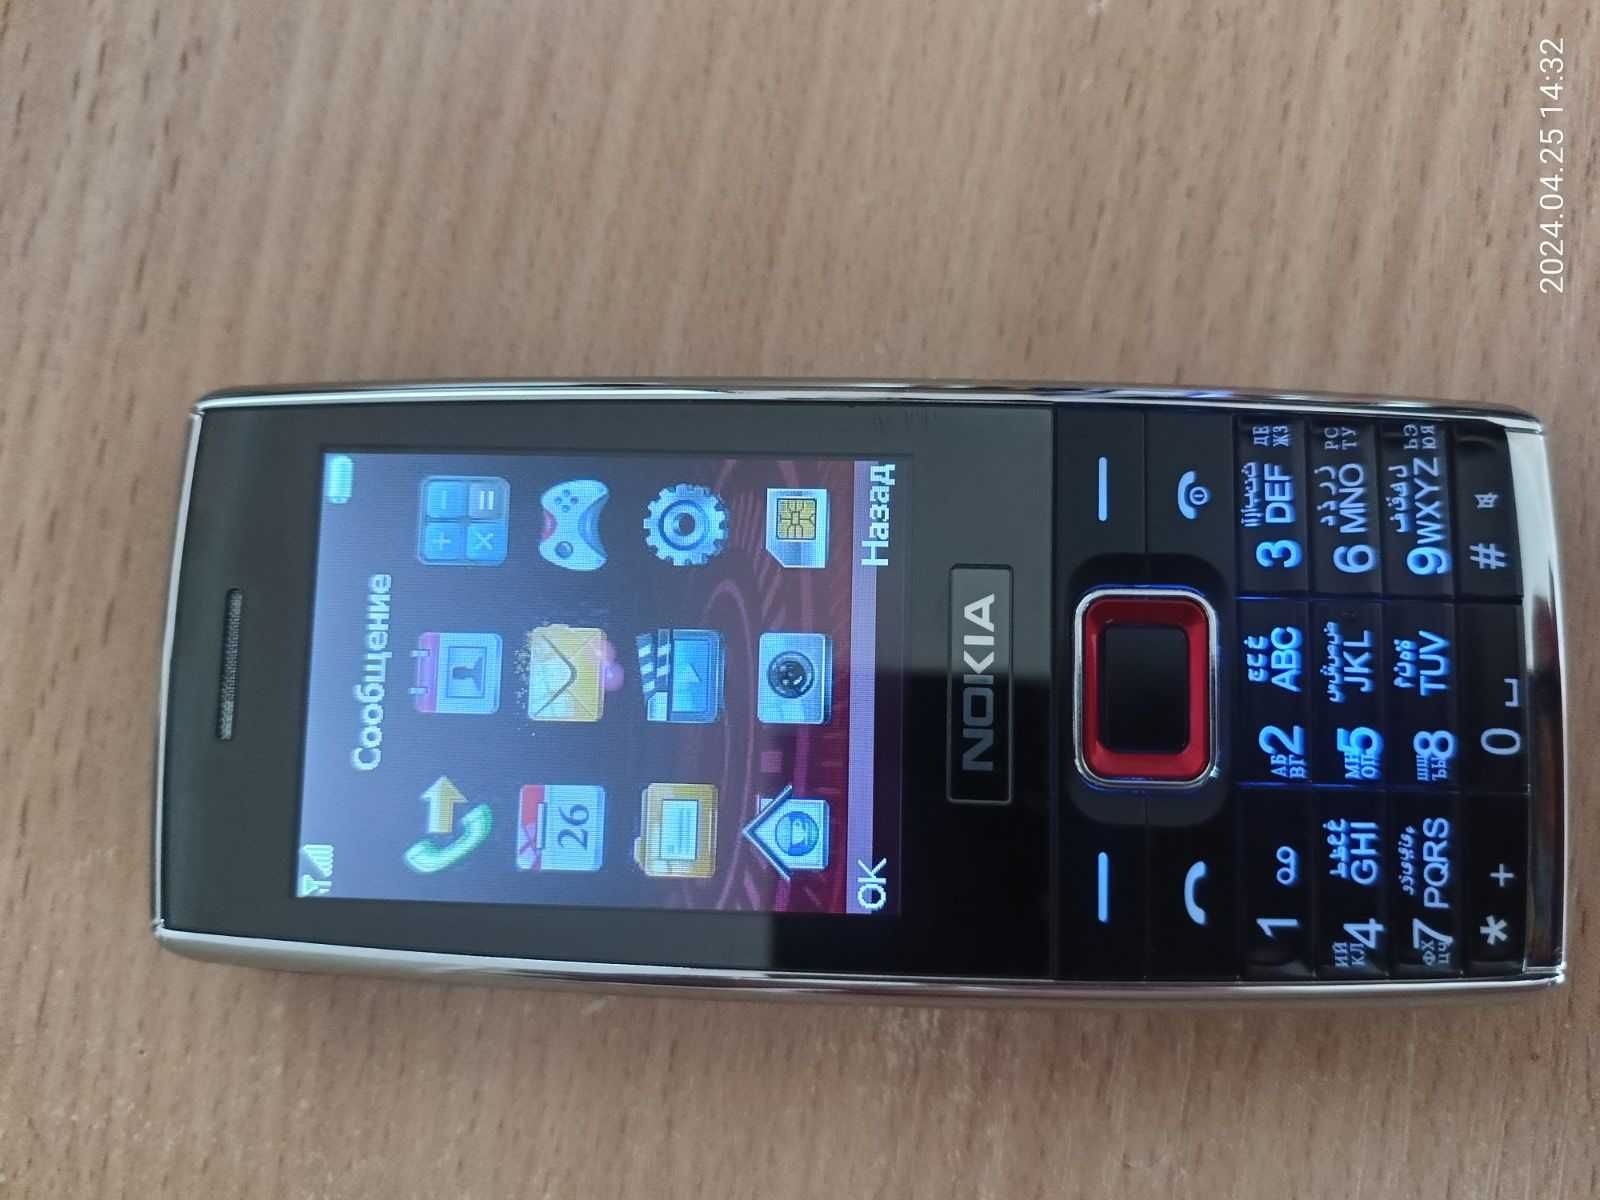 Nokia X2 07 China